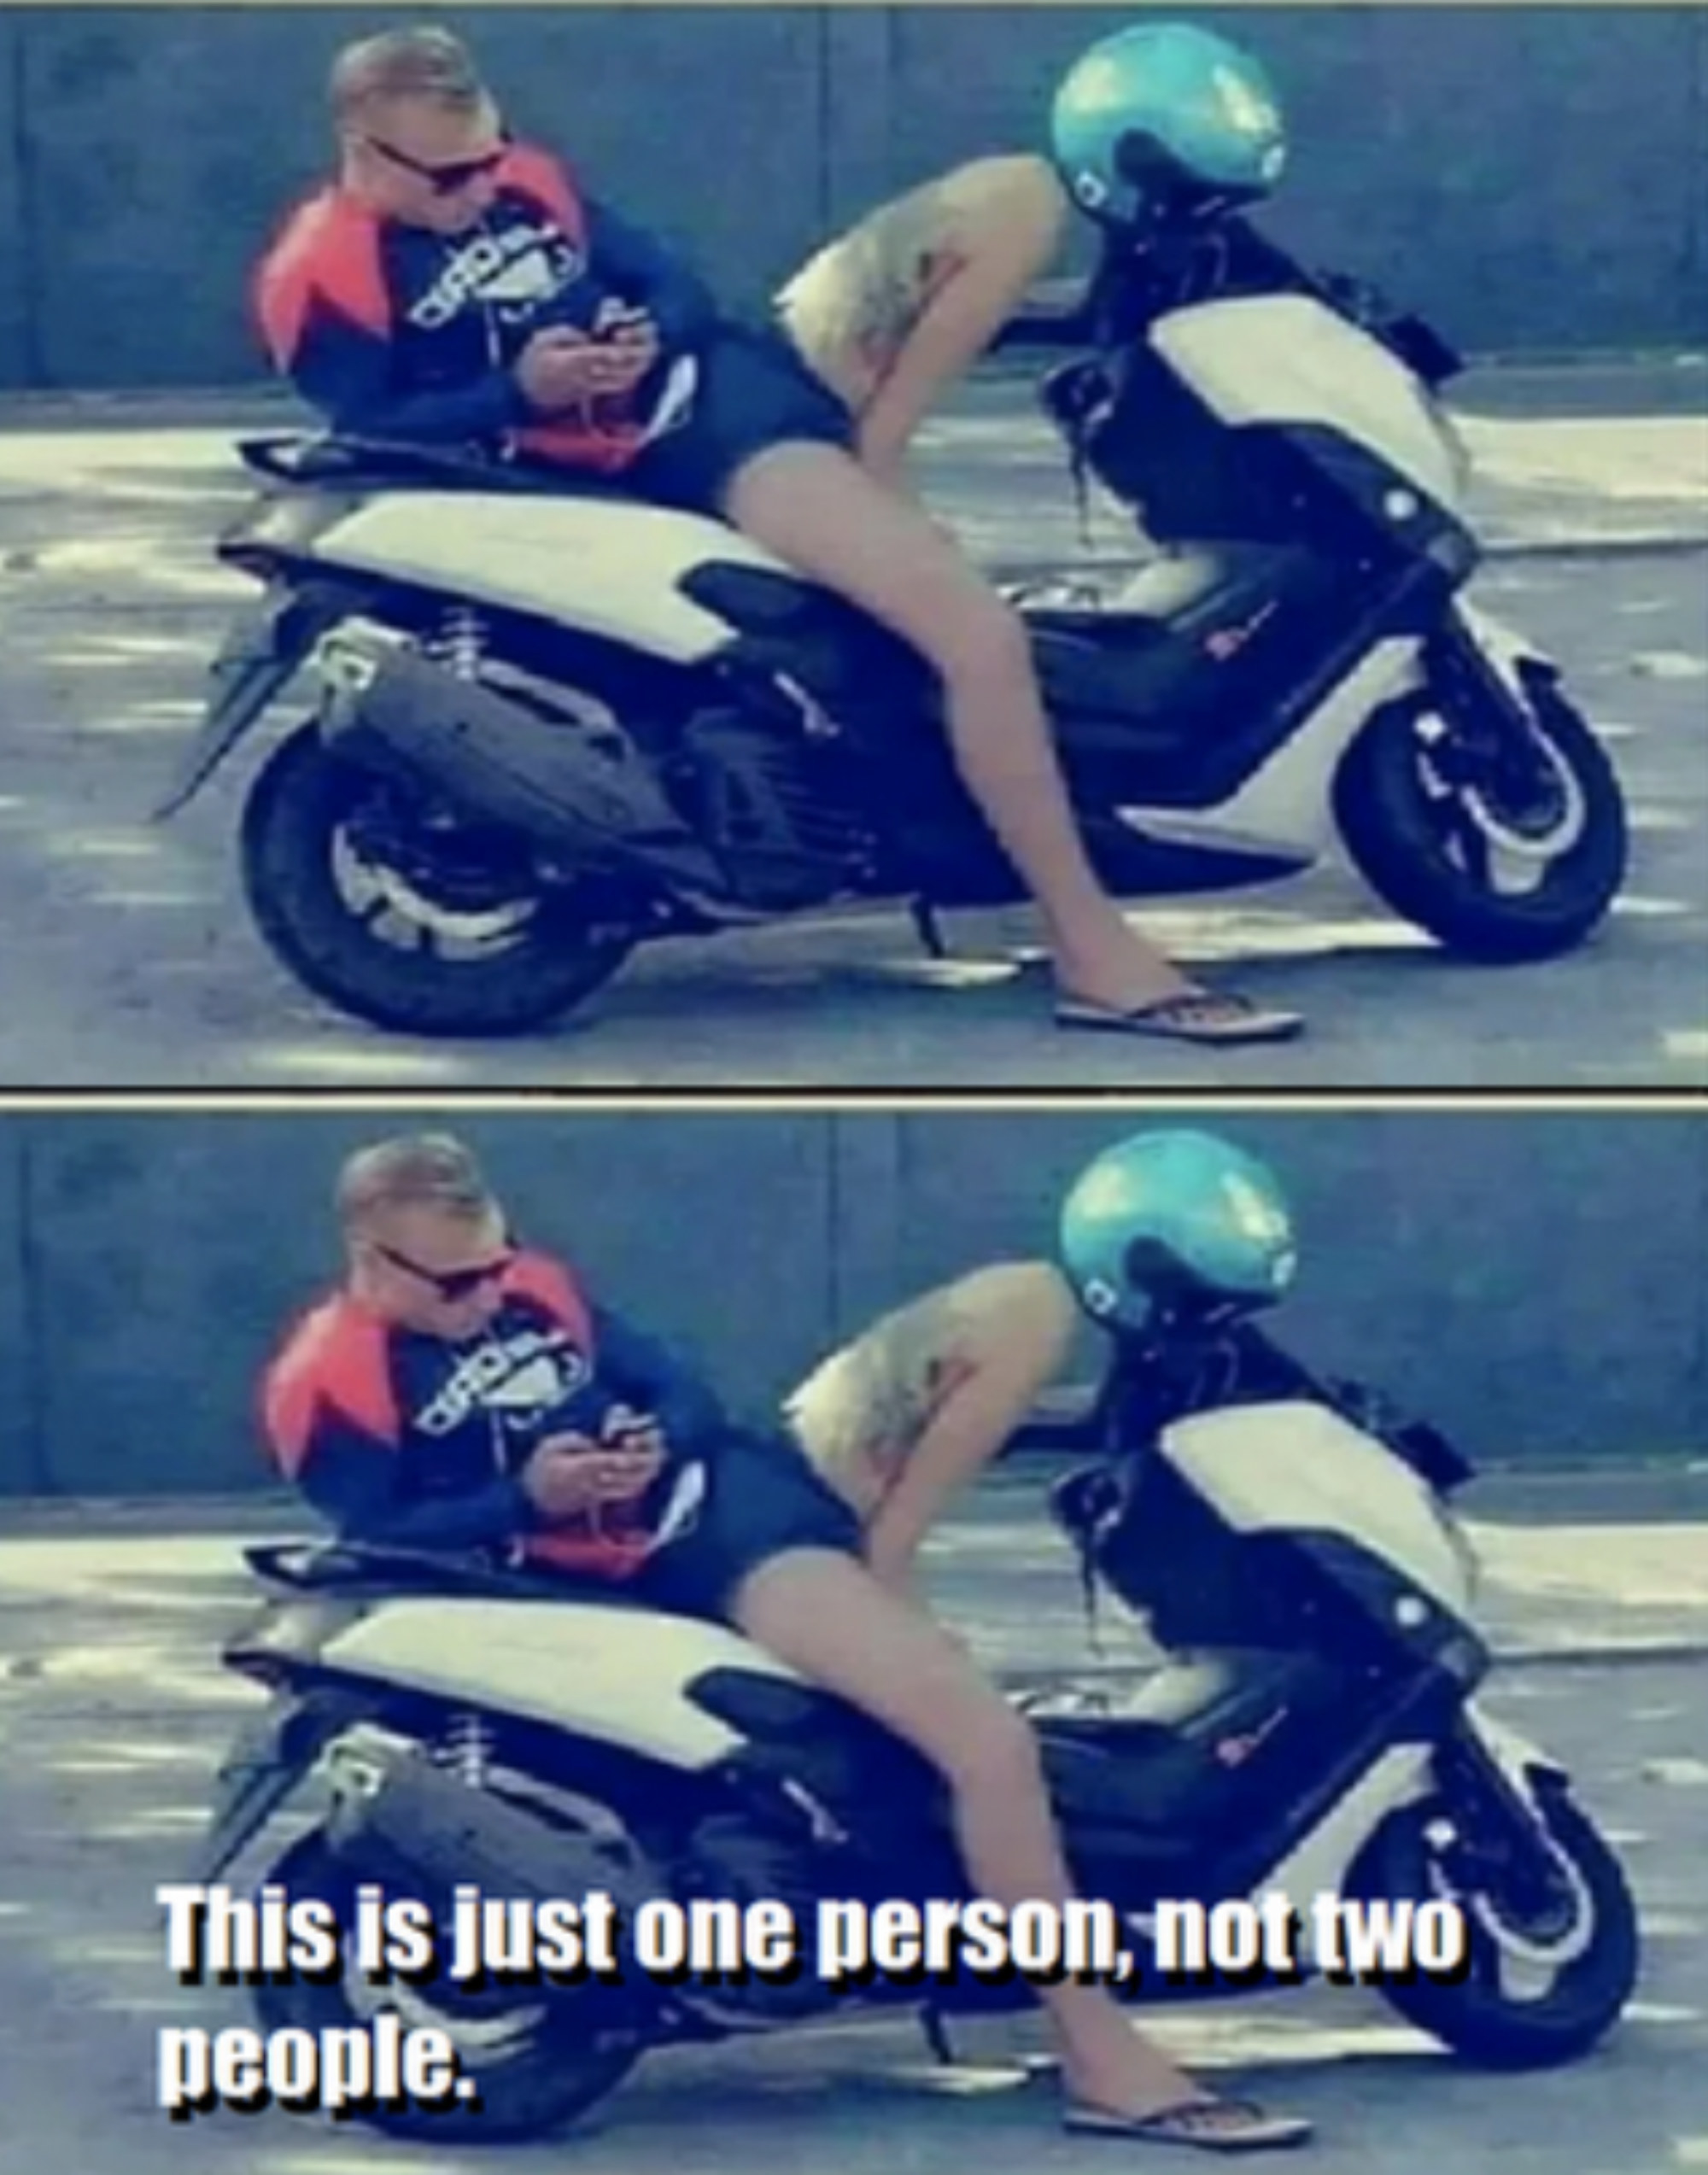 A man sitting on his motorbike